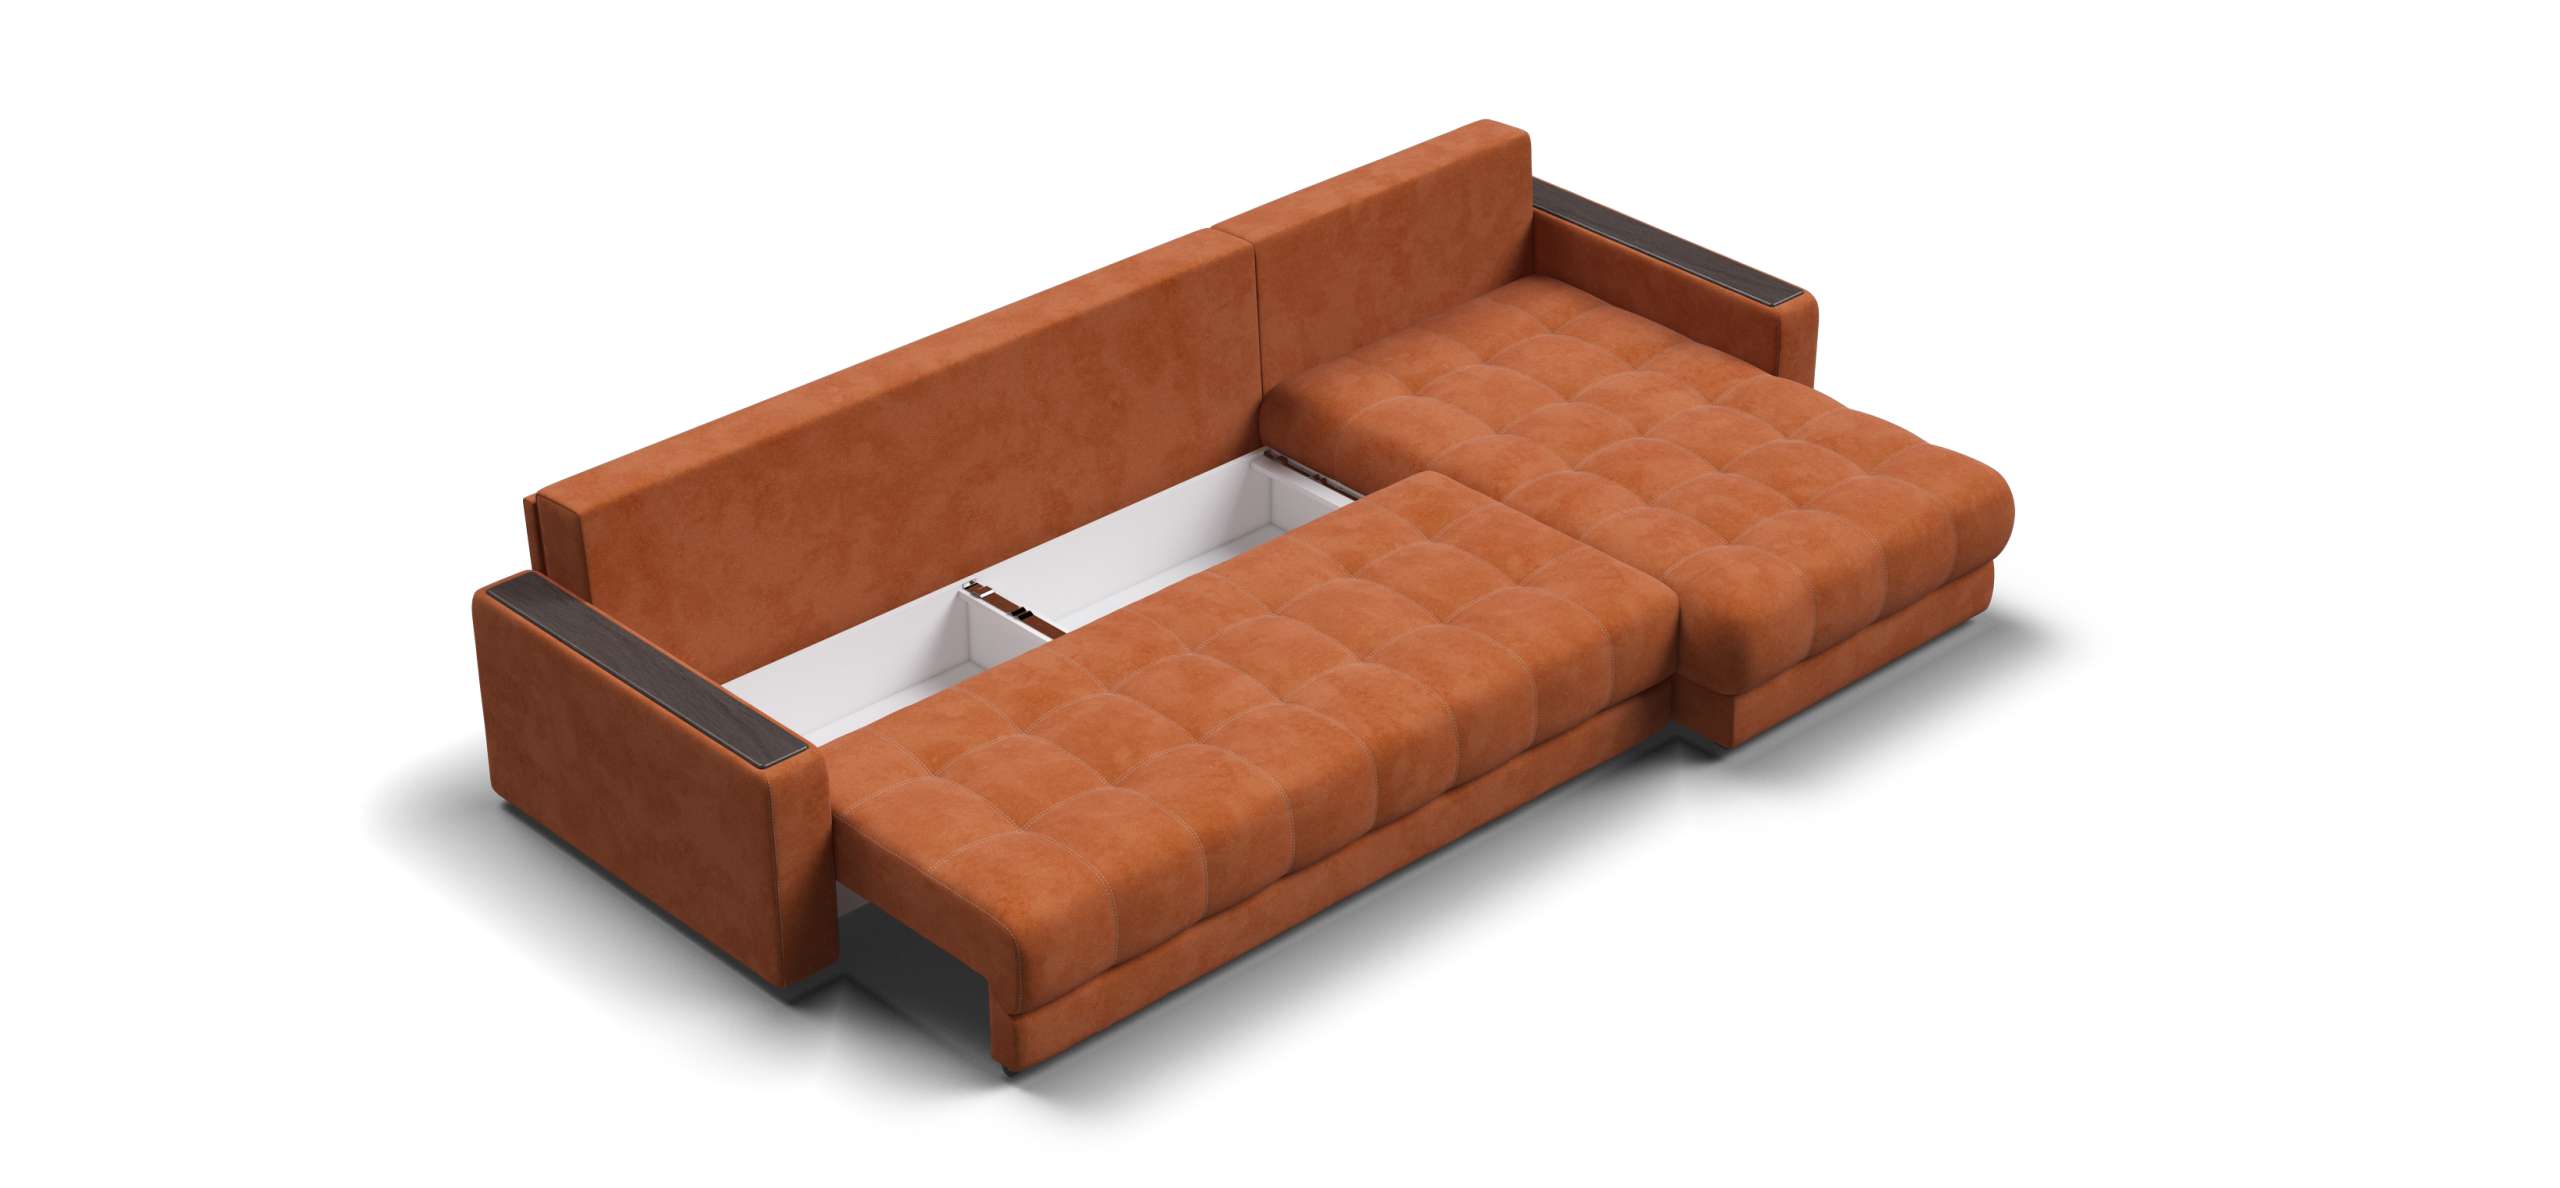 Угловой диван раскладной boss 3.0 max велюр alkantara оранж